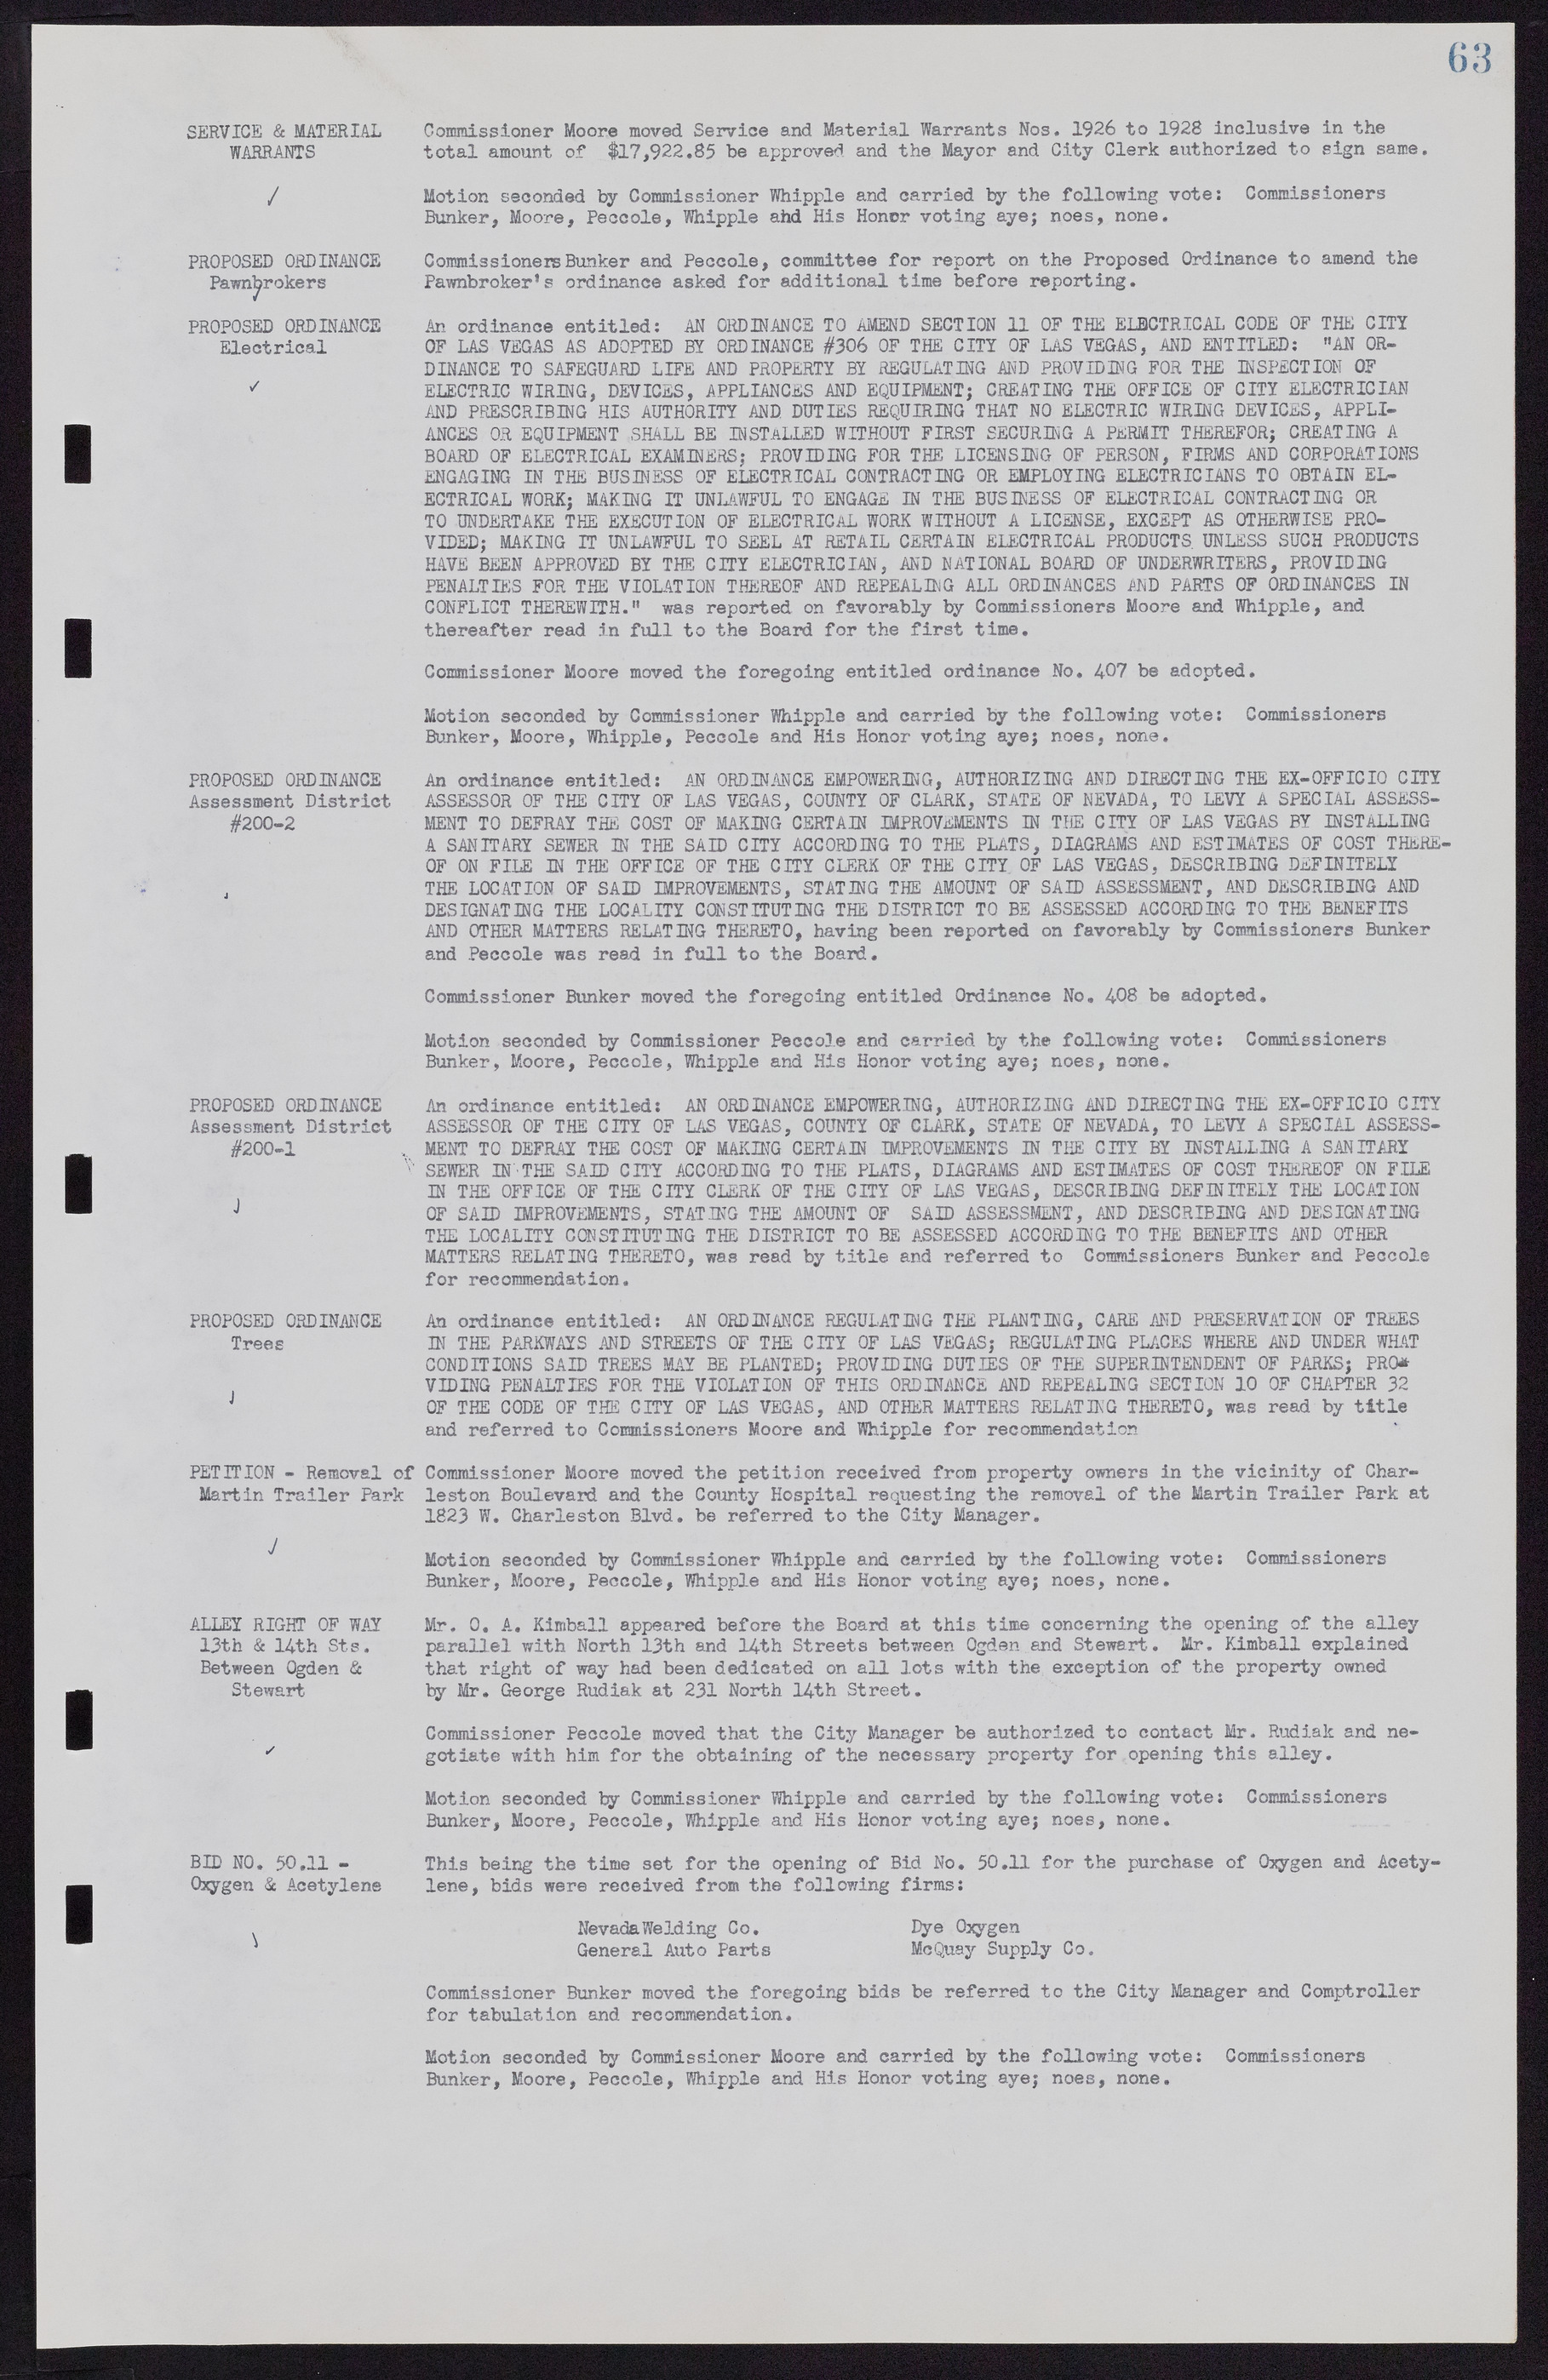 Las Vegas City Commission Minutes, November 7, 1949 to May 21, 1952, lvc000007-71